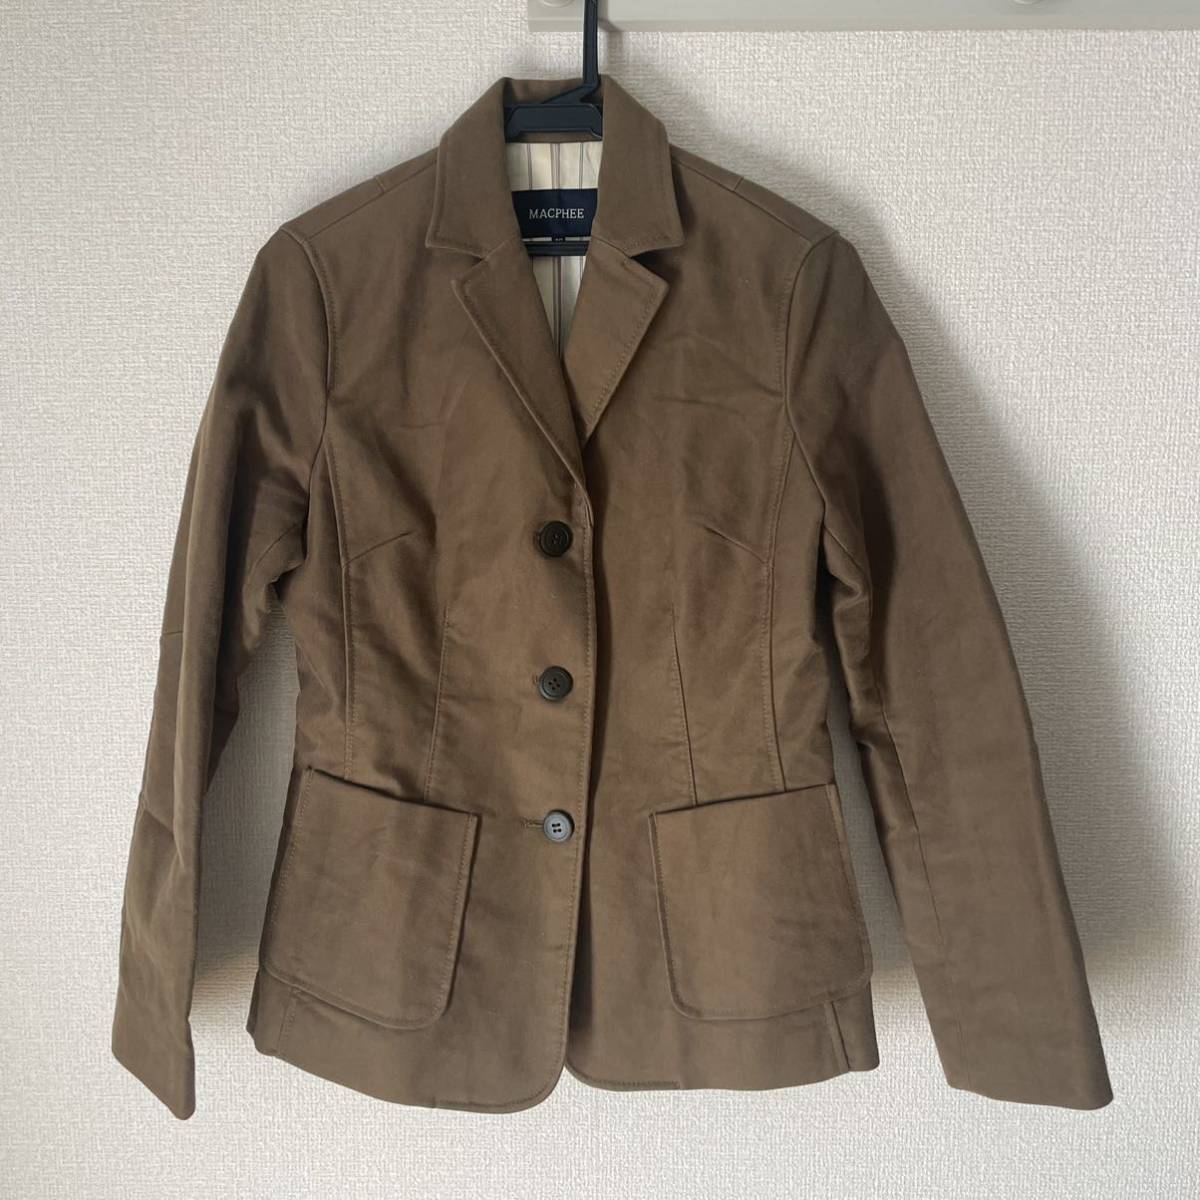  tailored jacket McAfee Tomorrowland size 40